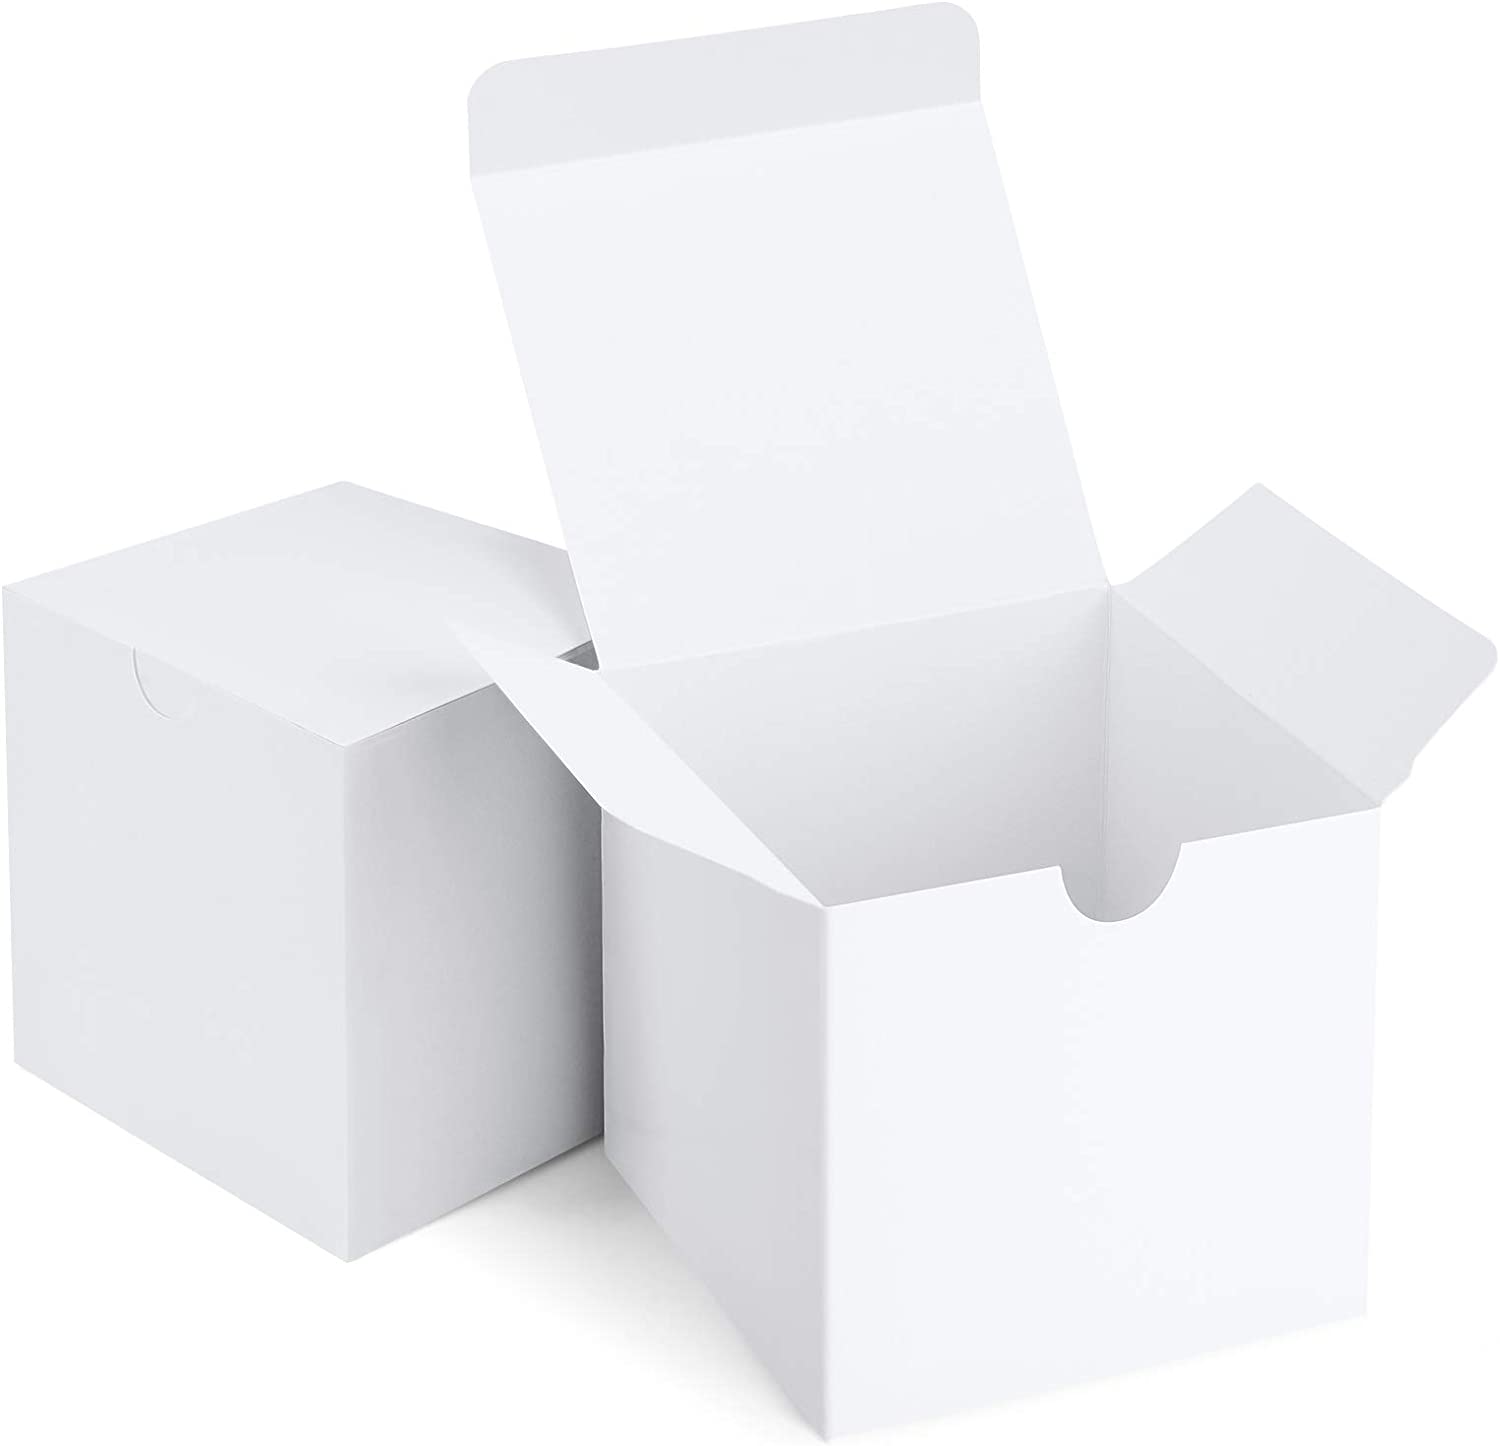 Paper Box 01